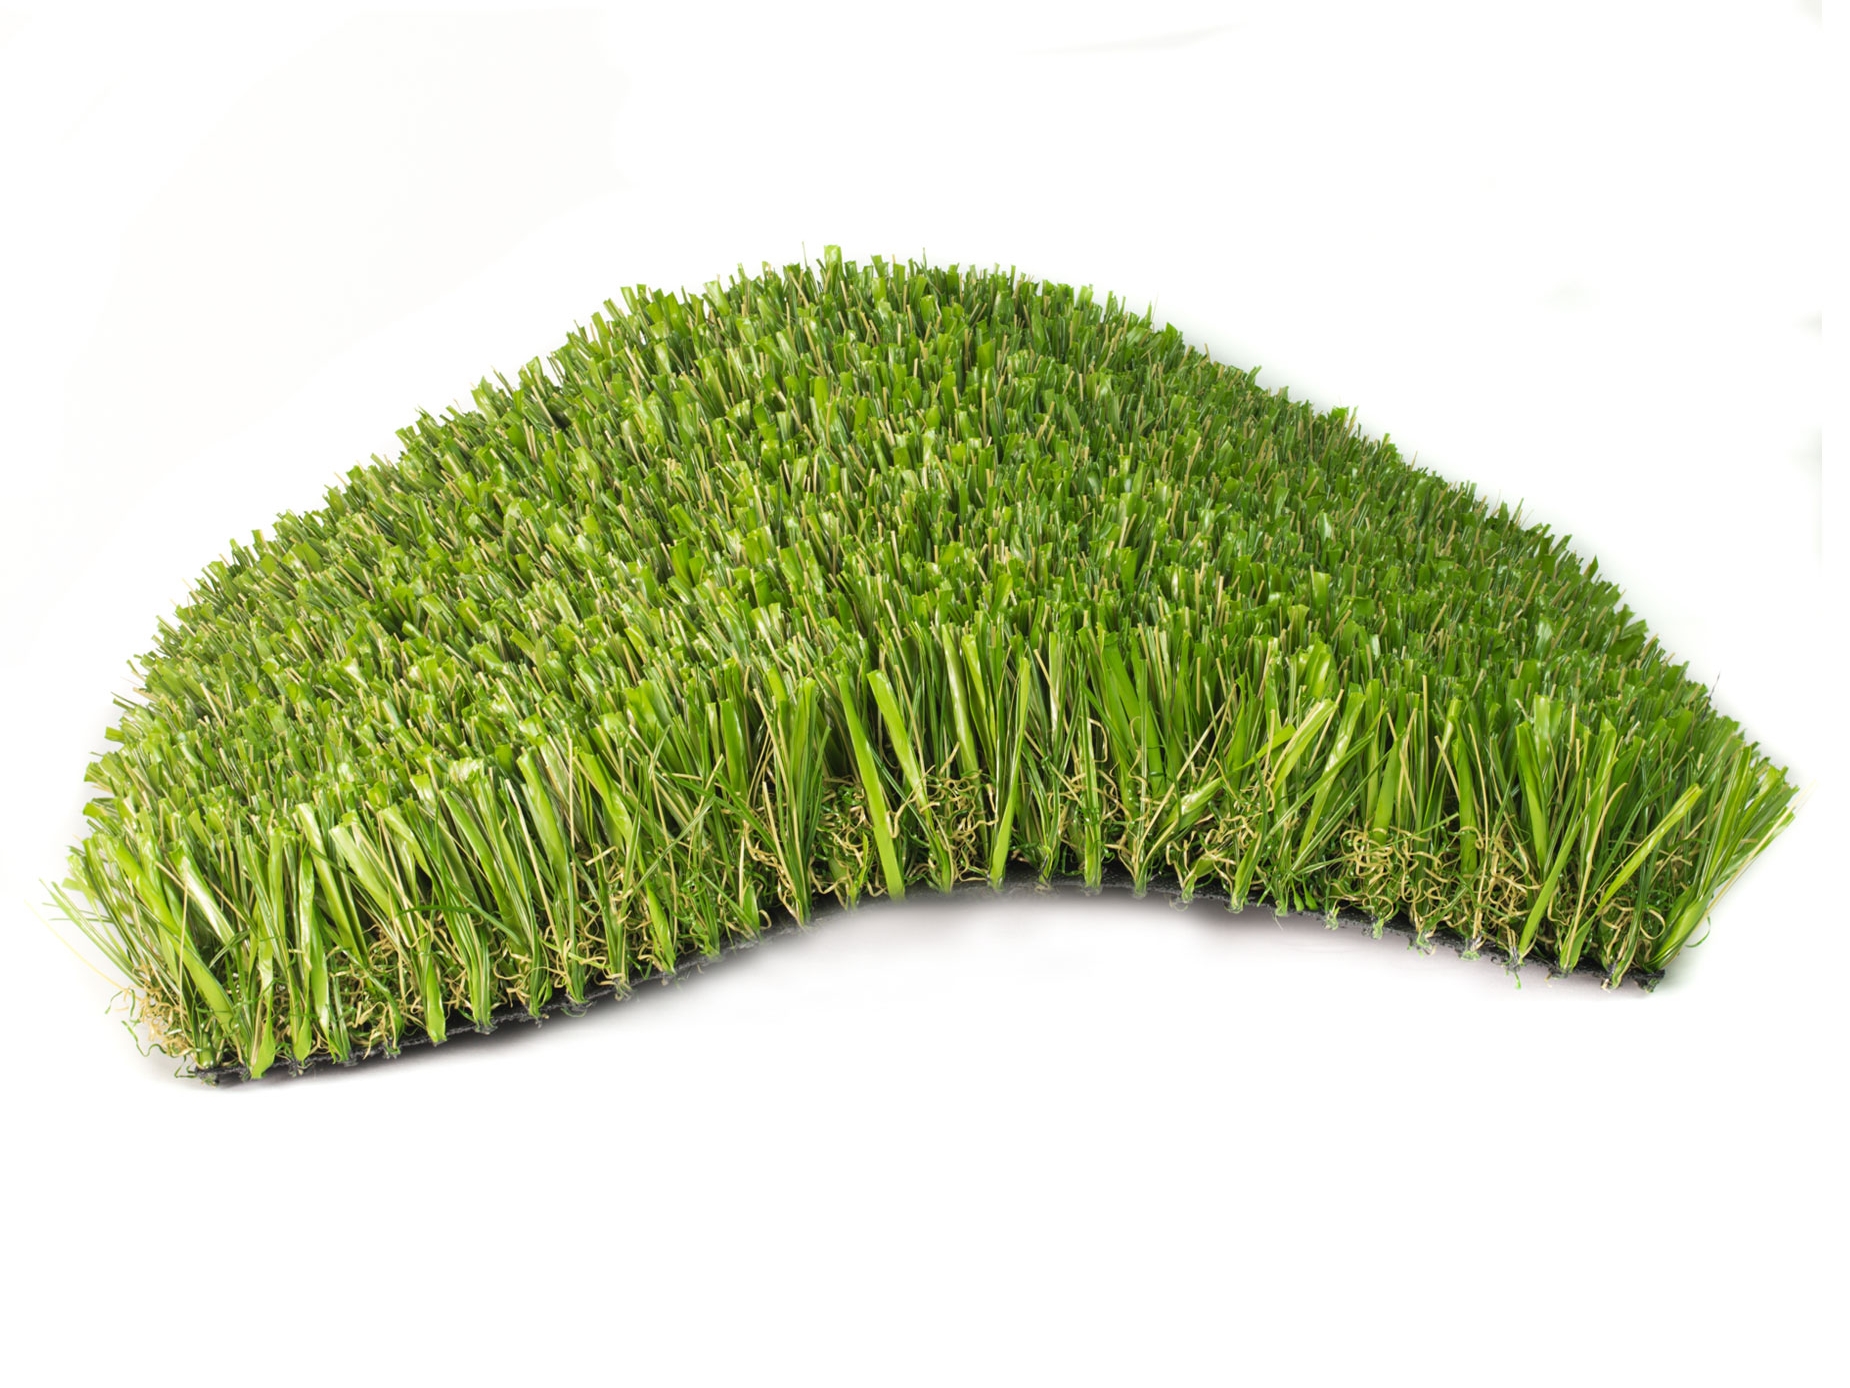 AST Supreme artificial grass, synthetic turf, grass, sample, Diamond Blade S Shape Blade W Shape Blade